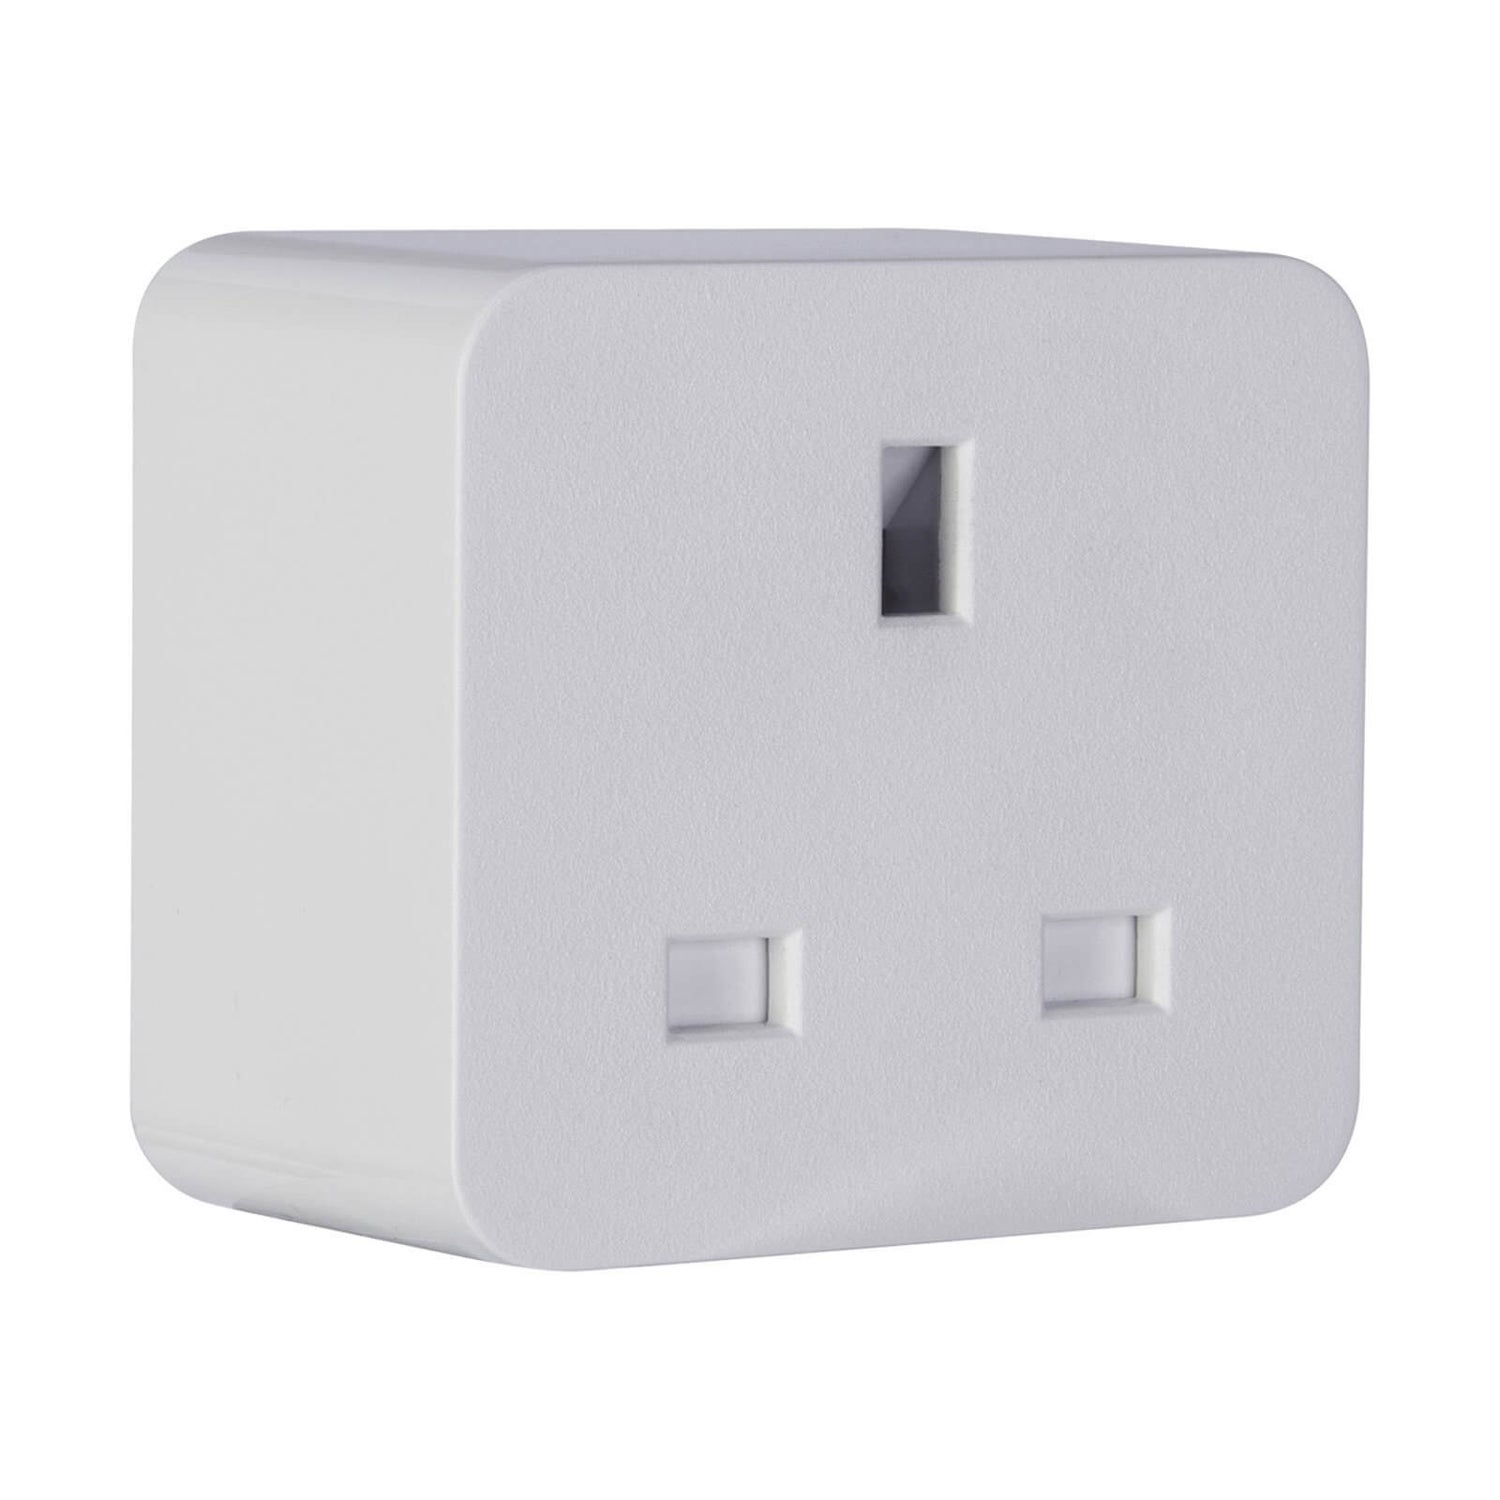 Smart Plug, SP8601, UK Version